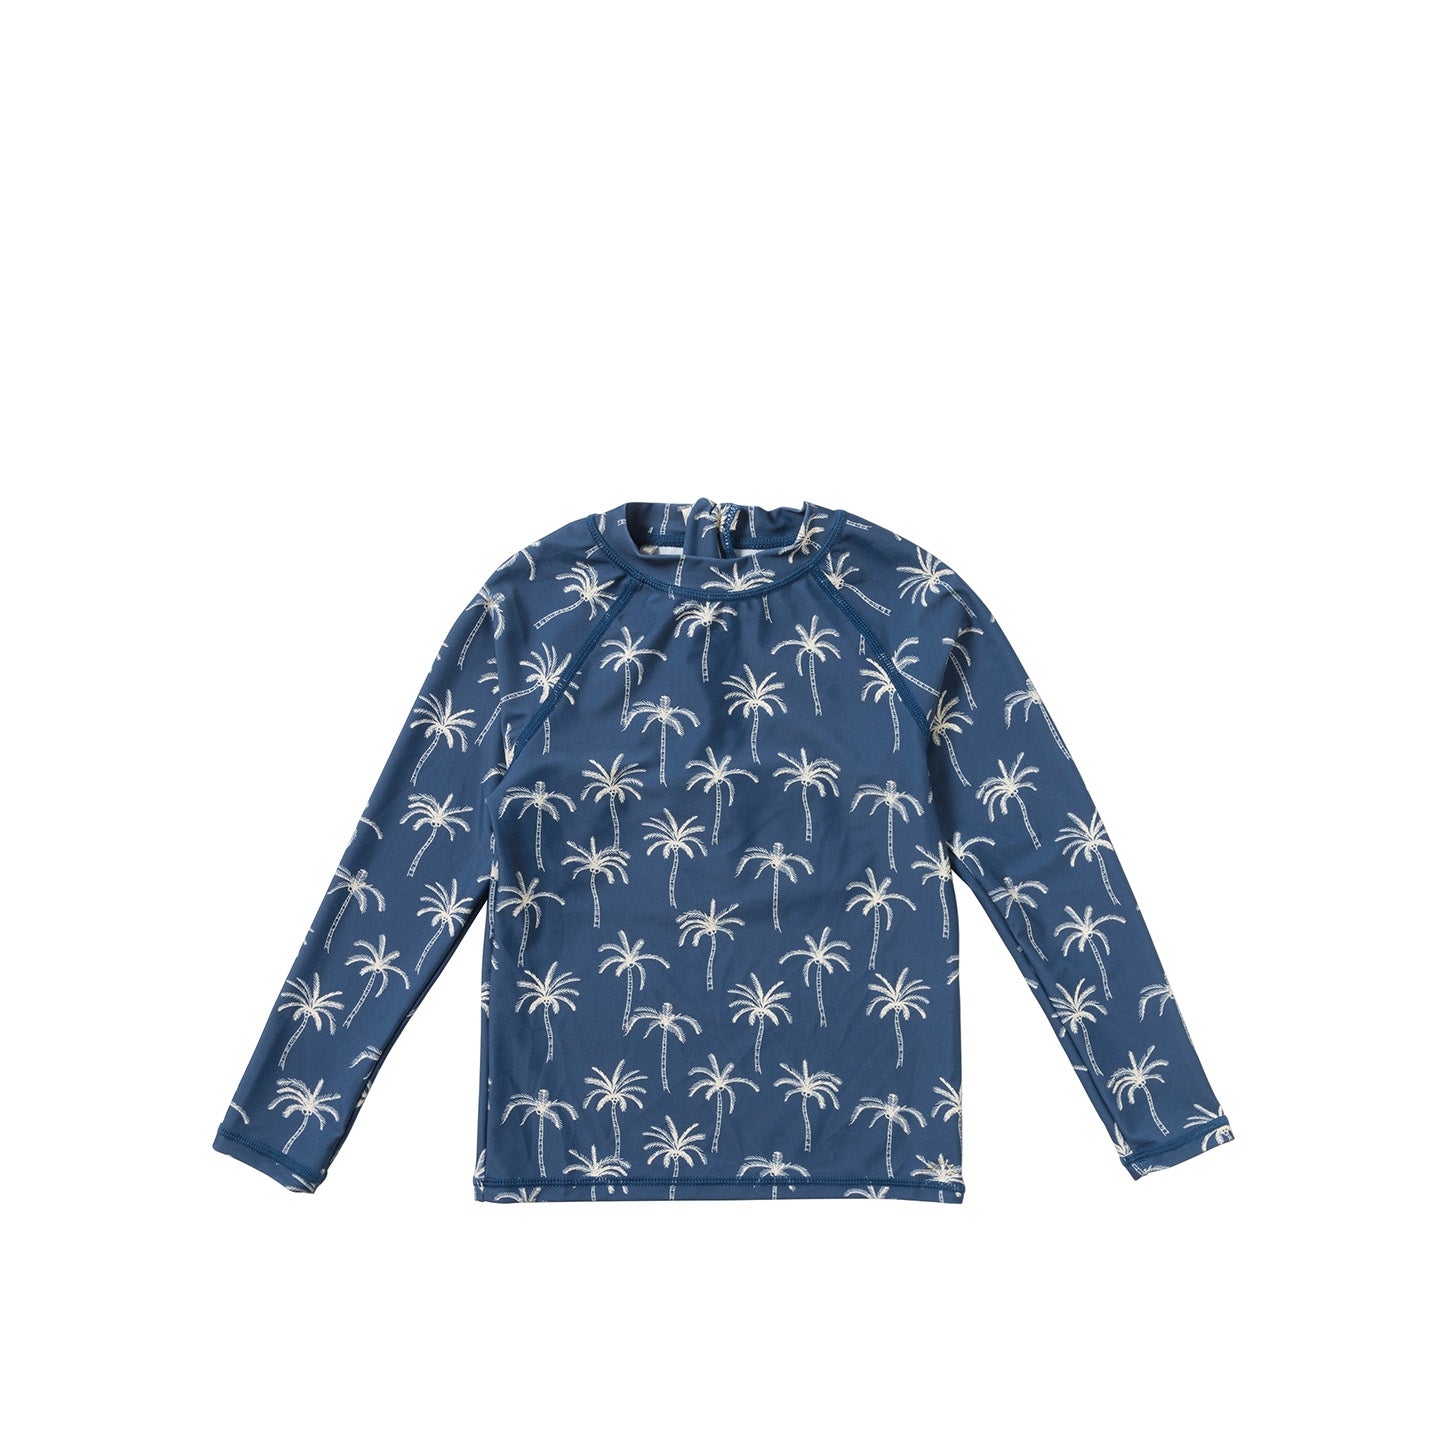 Jongens UV Shirt Long Sleeves Tropic | Sverre van Salted Stories in de kleur Ensign Blue in maat 122-128.